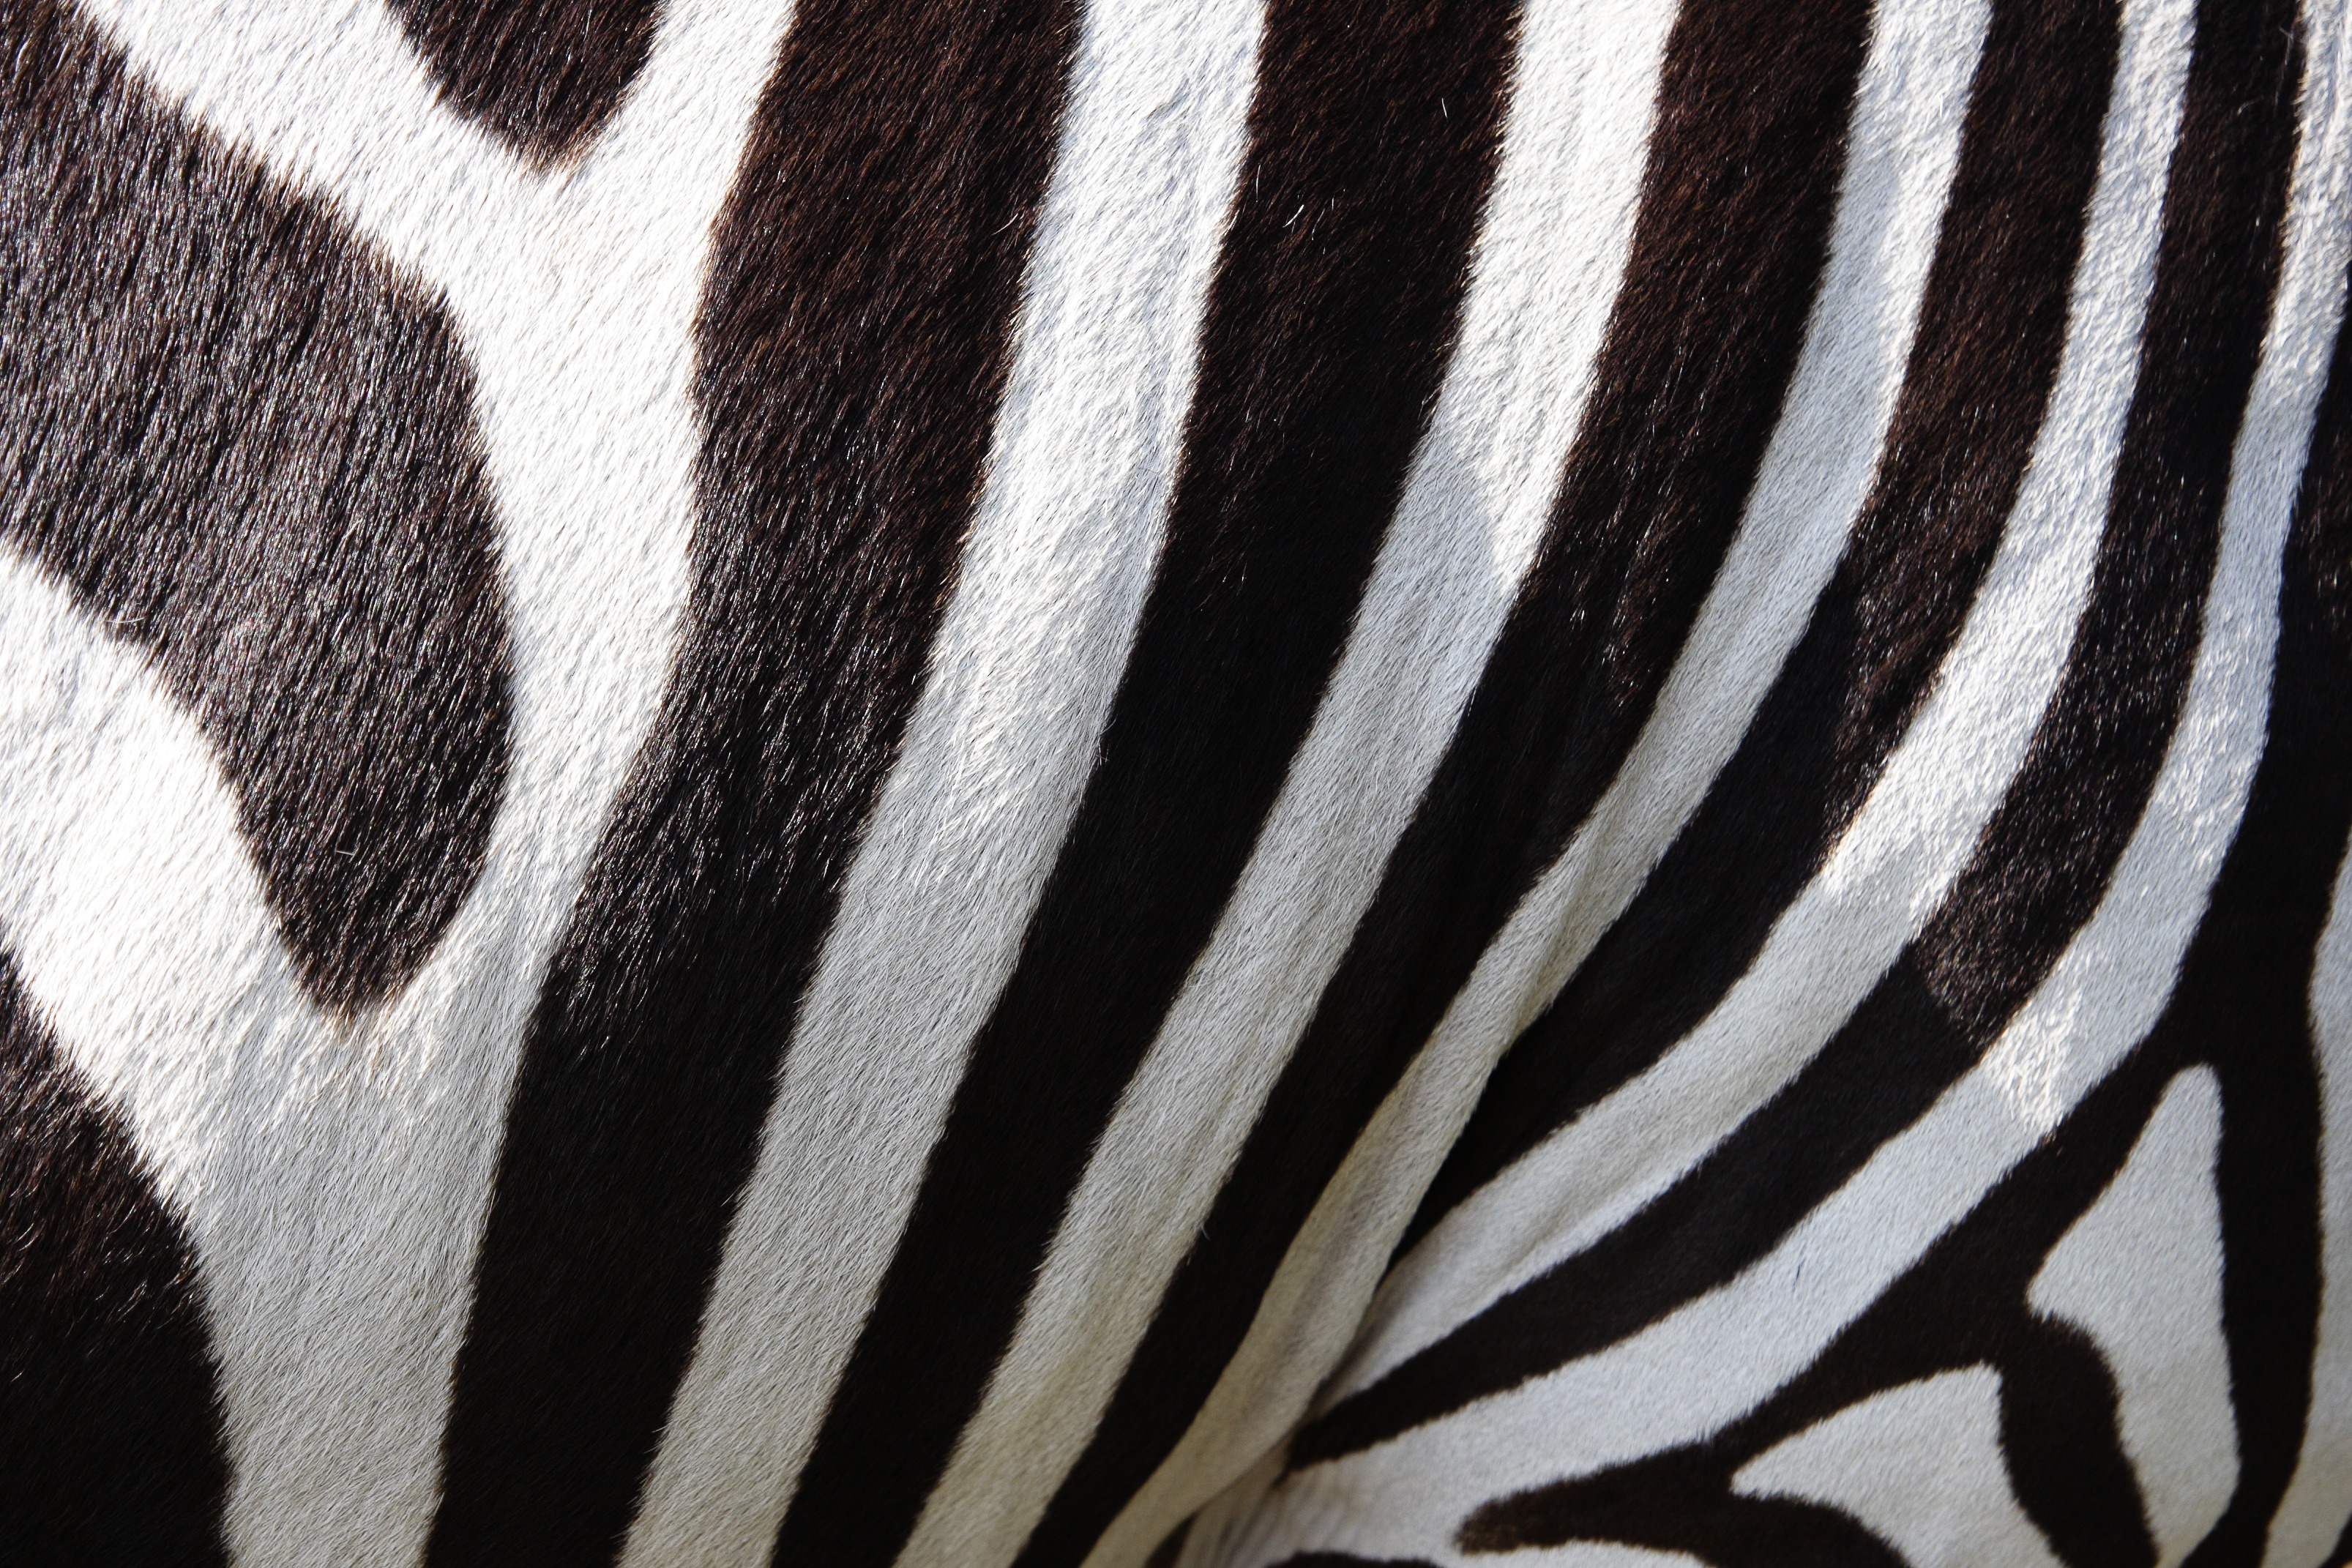 stripes, zebra, abstract, texture, black & white, fur